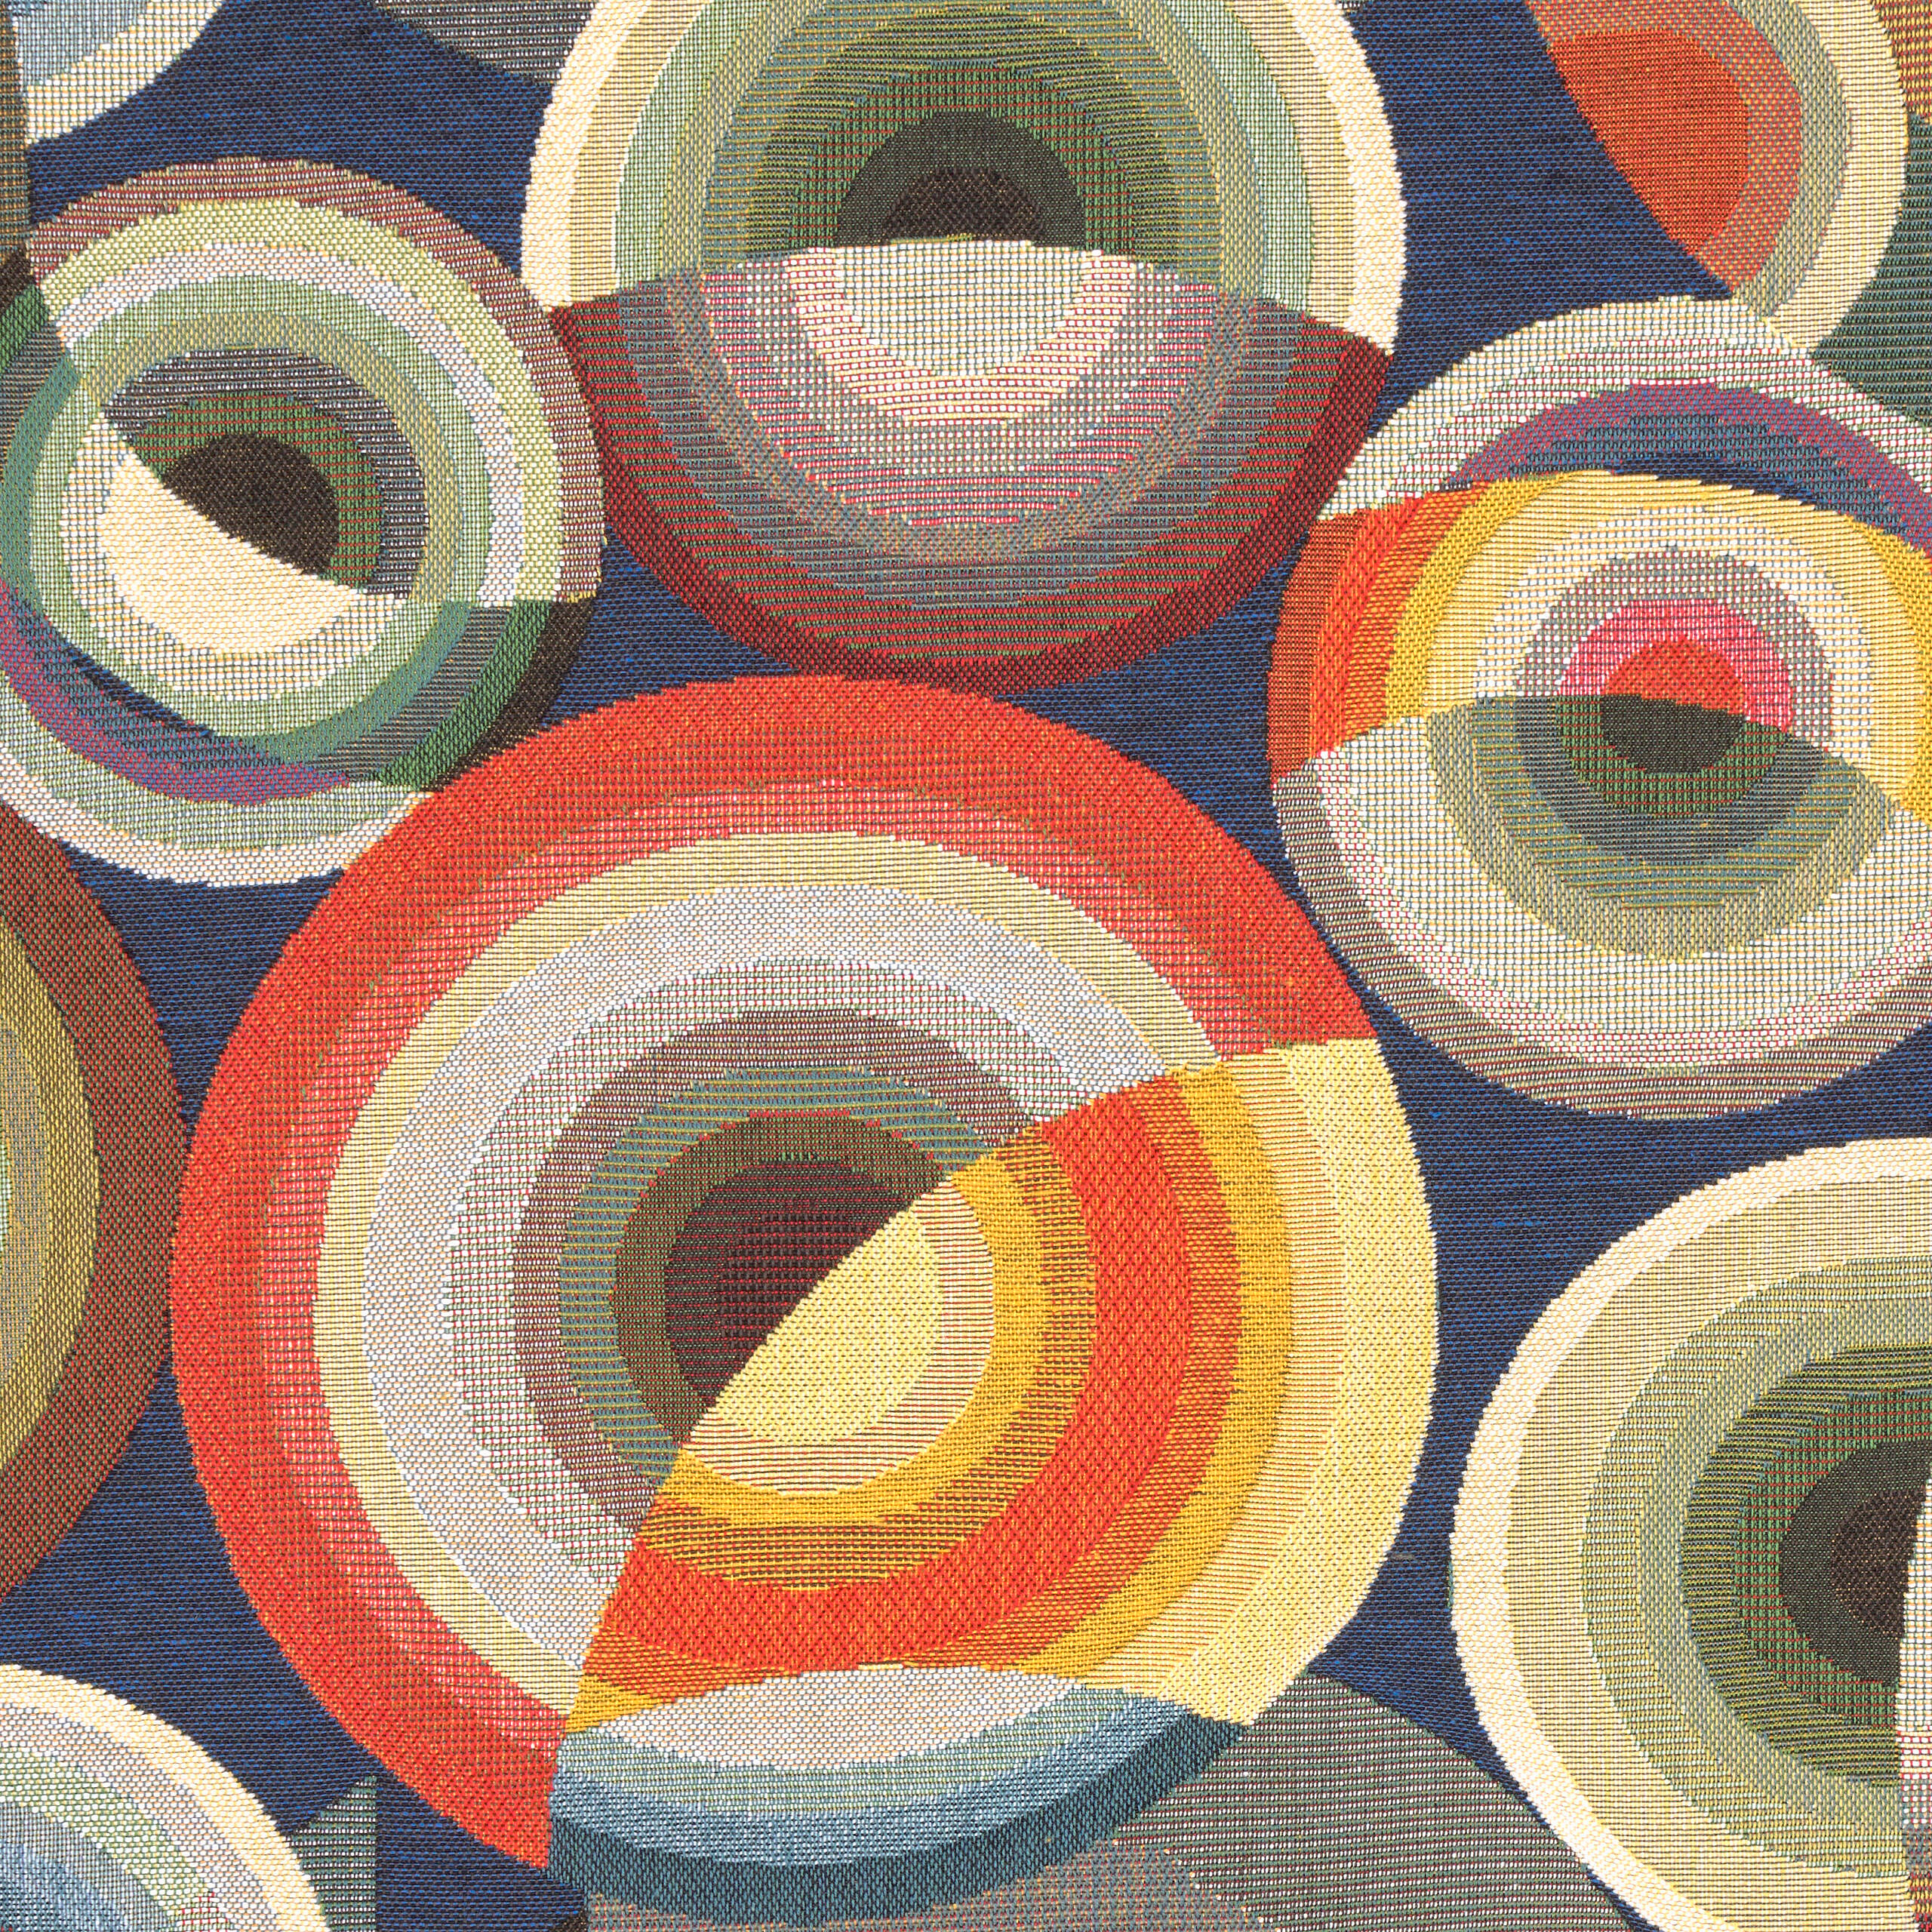 ‘Mil Neuf Cent Vingt’ fabric by Pierre Frey